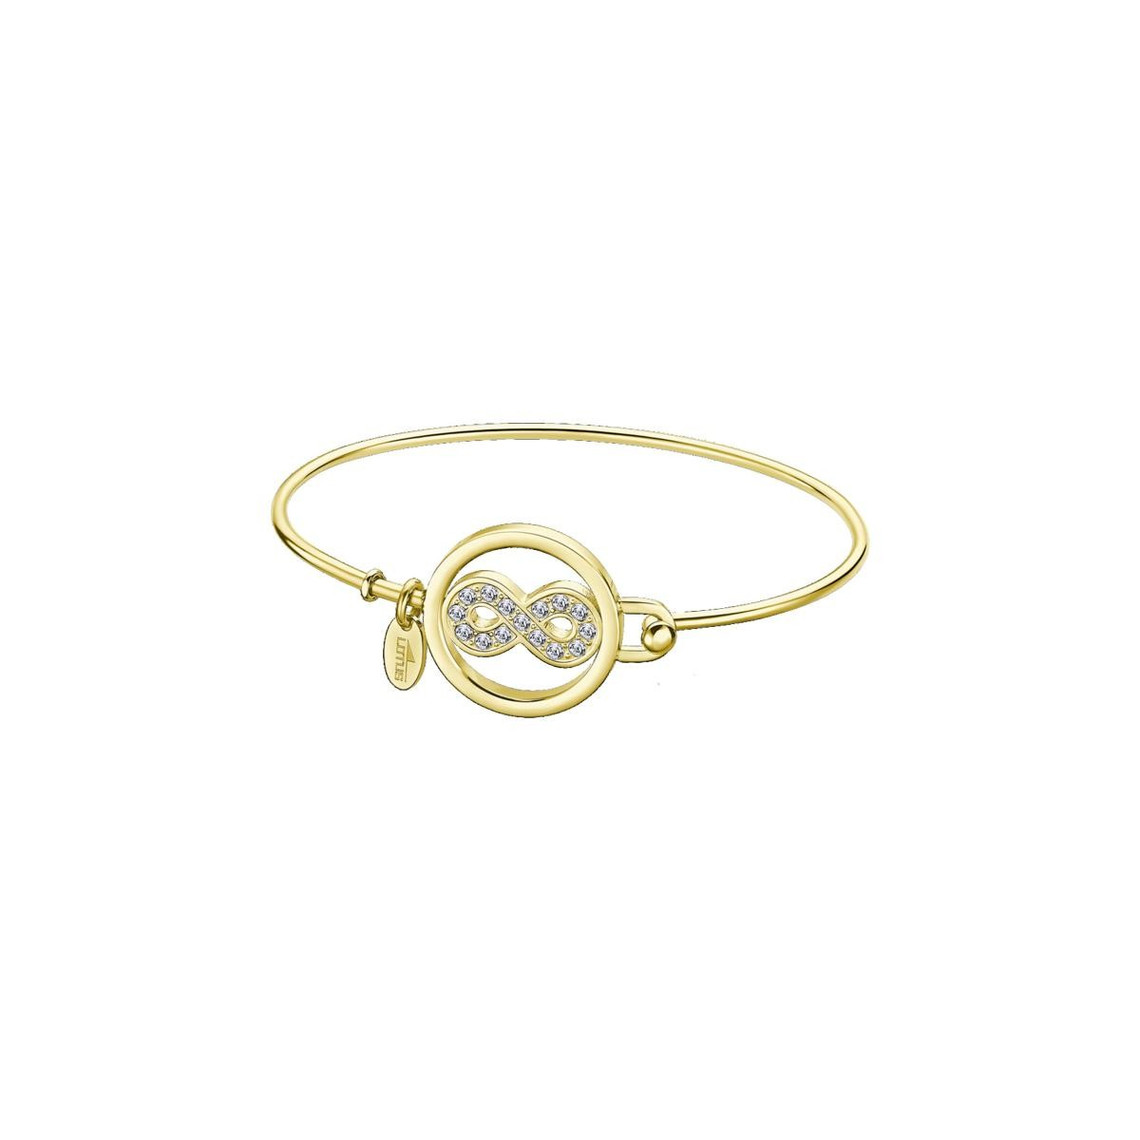 bracelet femme ls2119-2-2 lotus style